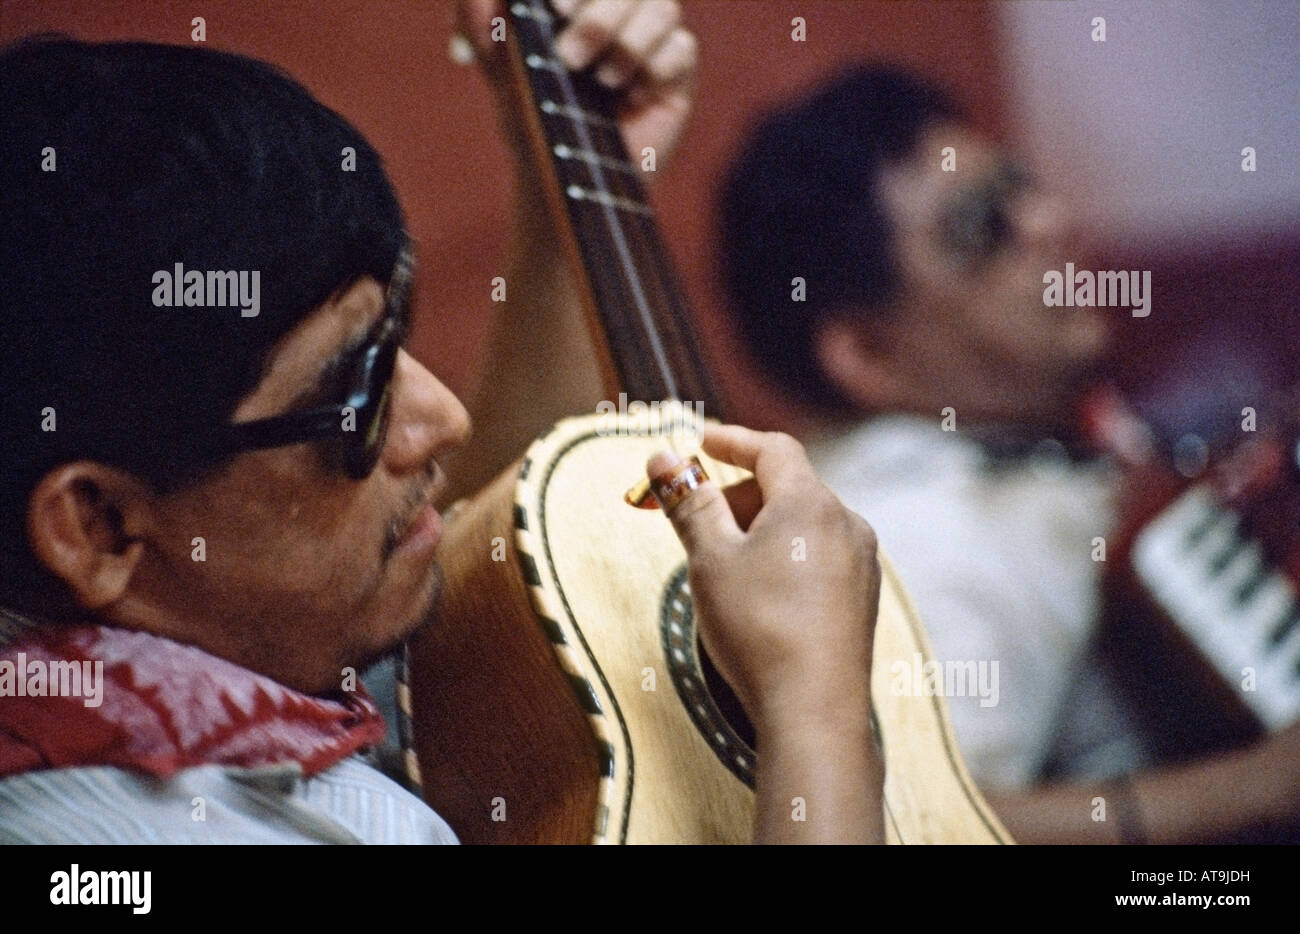 Musikern in einer Cantina in Zentralmexiko Yucatan Stockfoto